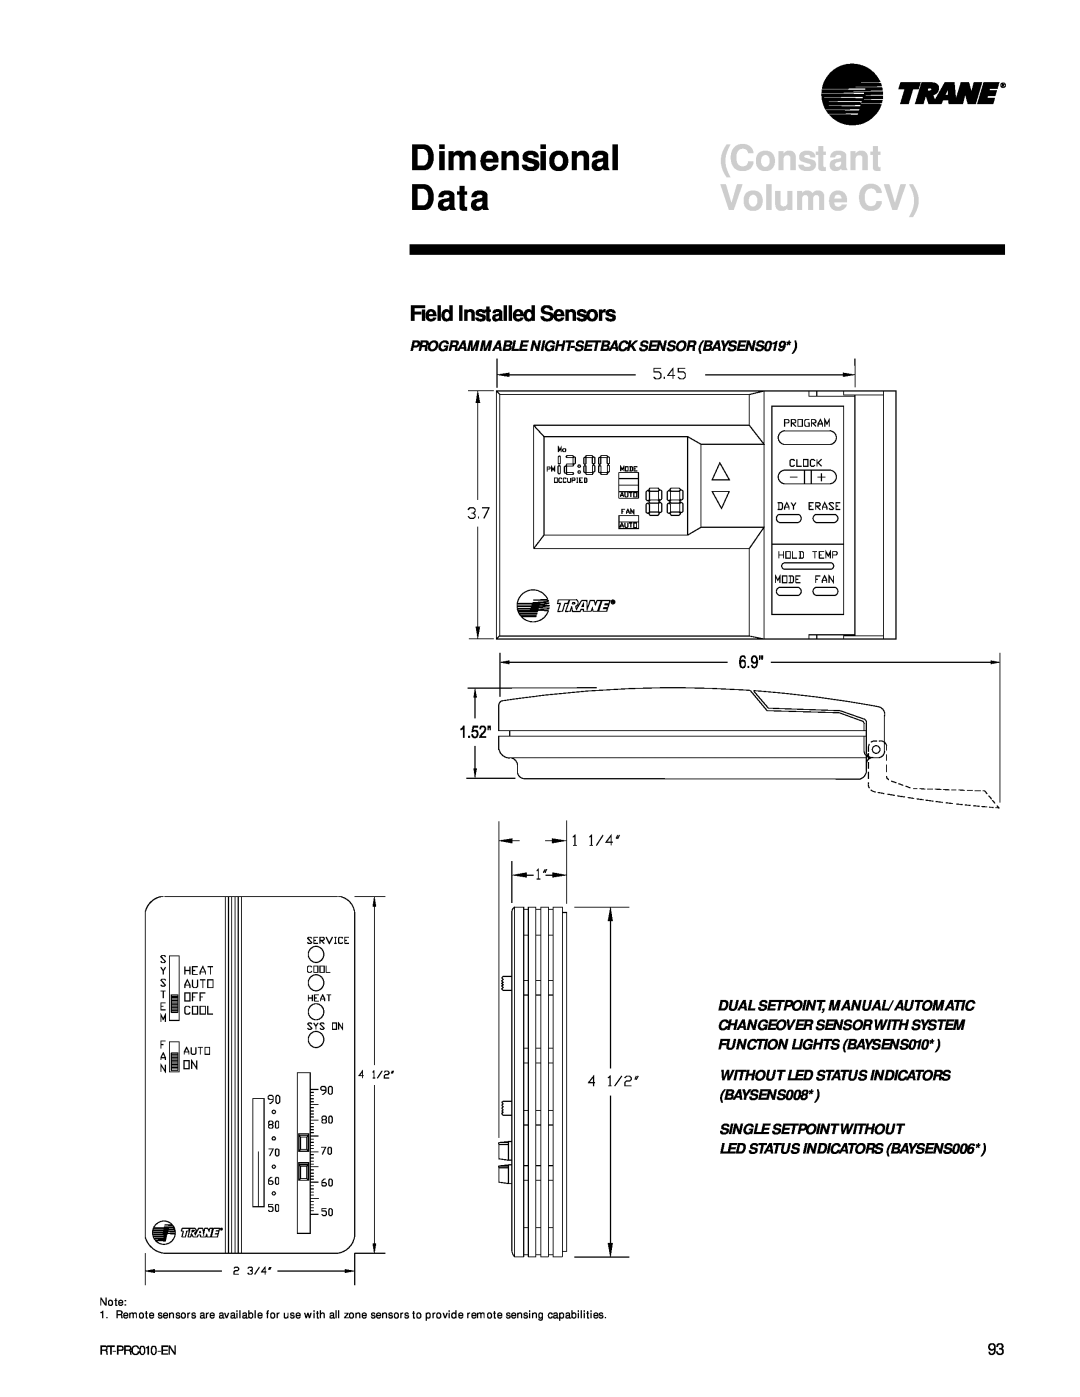 Trane RT-PRC010-EN manual Constant, Volume CV, Dimensional, Data, Field Installed Sensors 